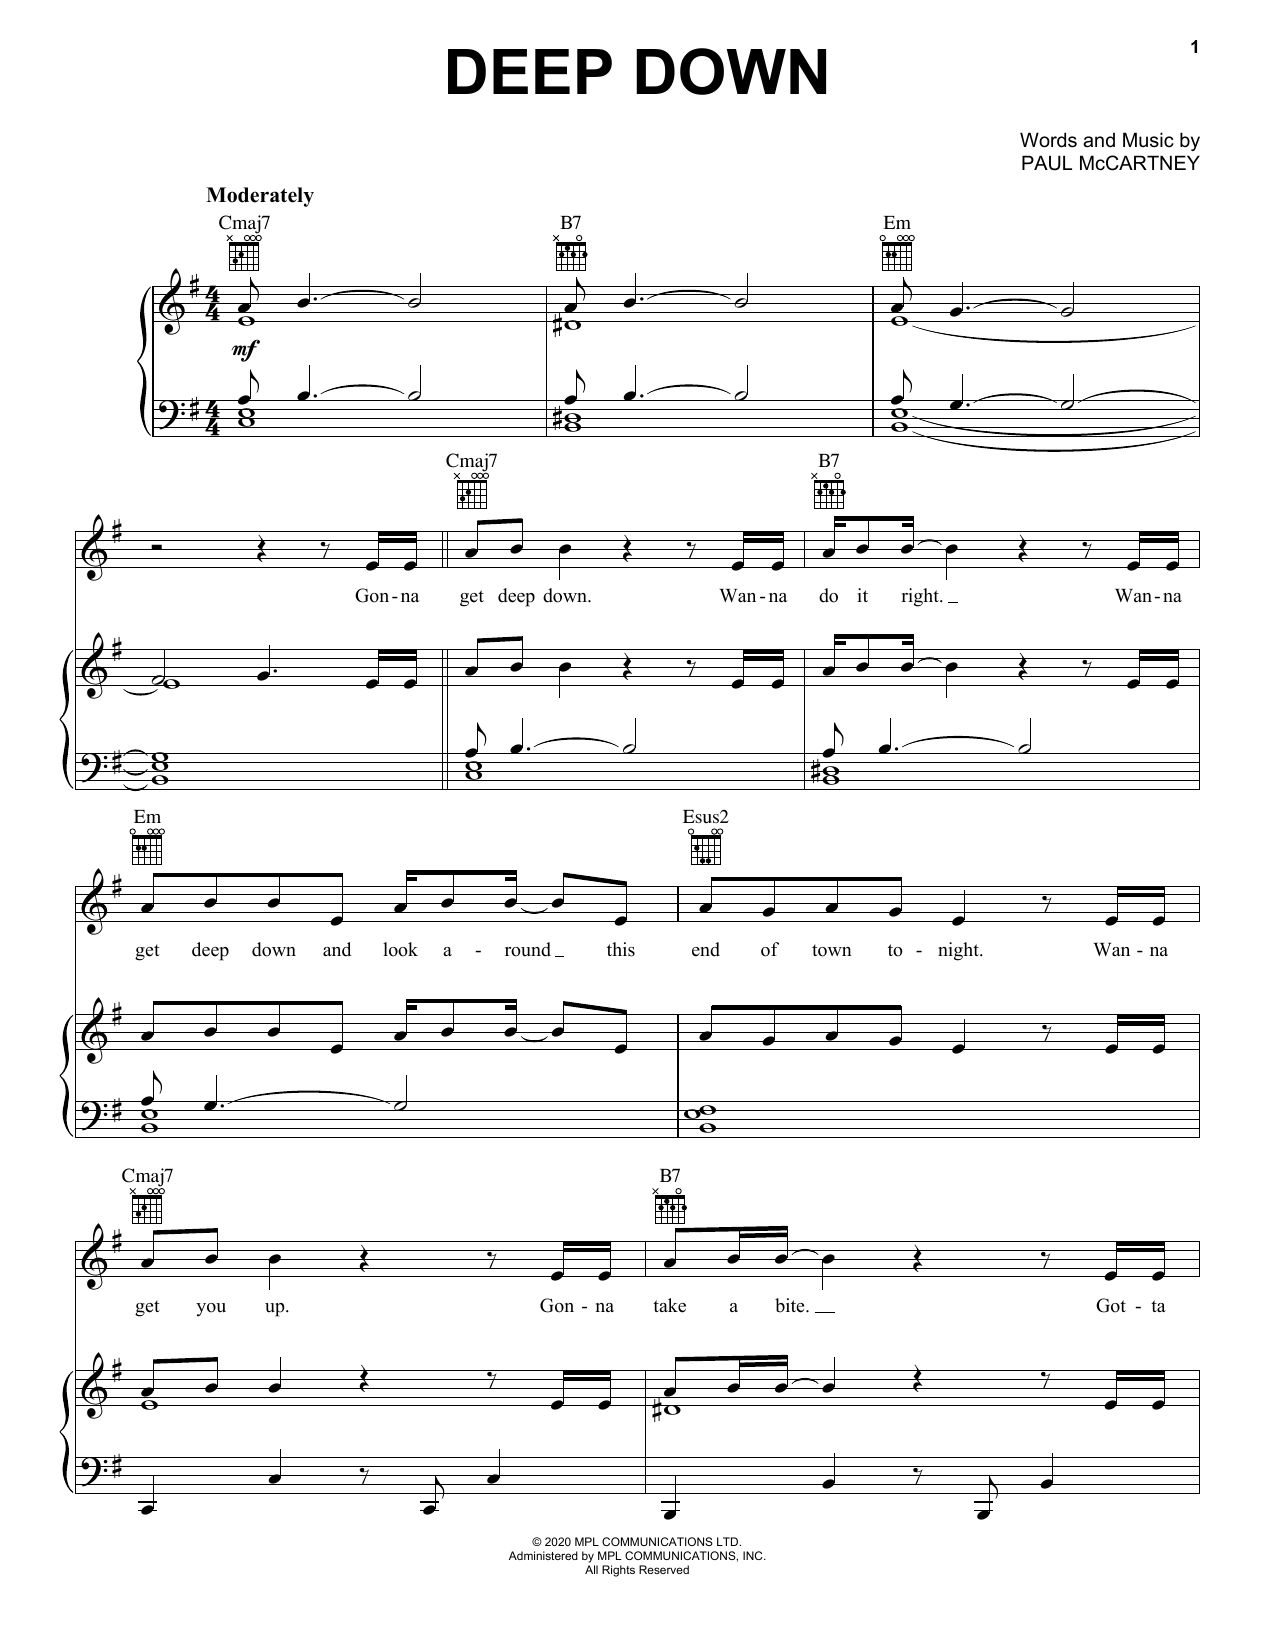 Paul McCartney Deep Down Sheet Music Notes & Chords for Lead Sheet / Fake Book - Download or Print PDF